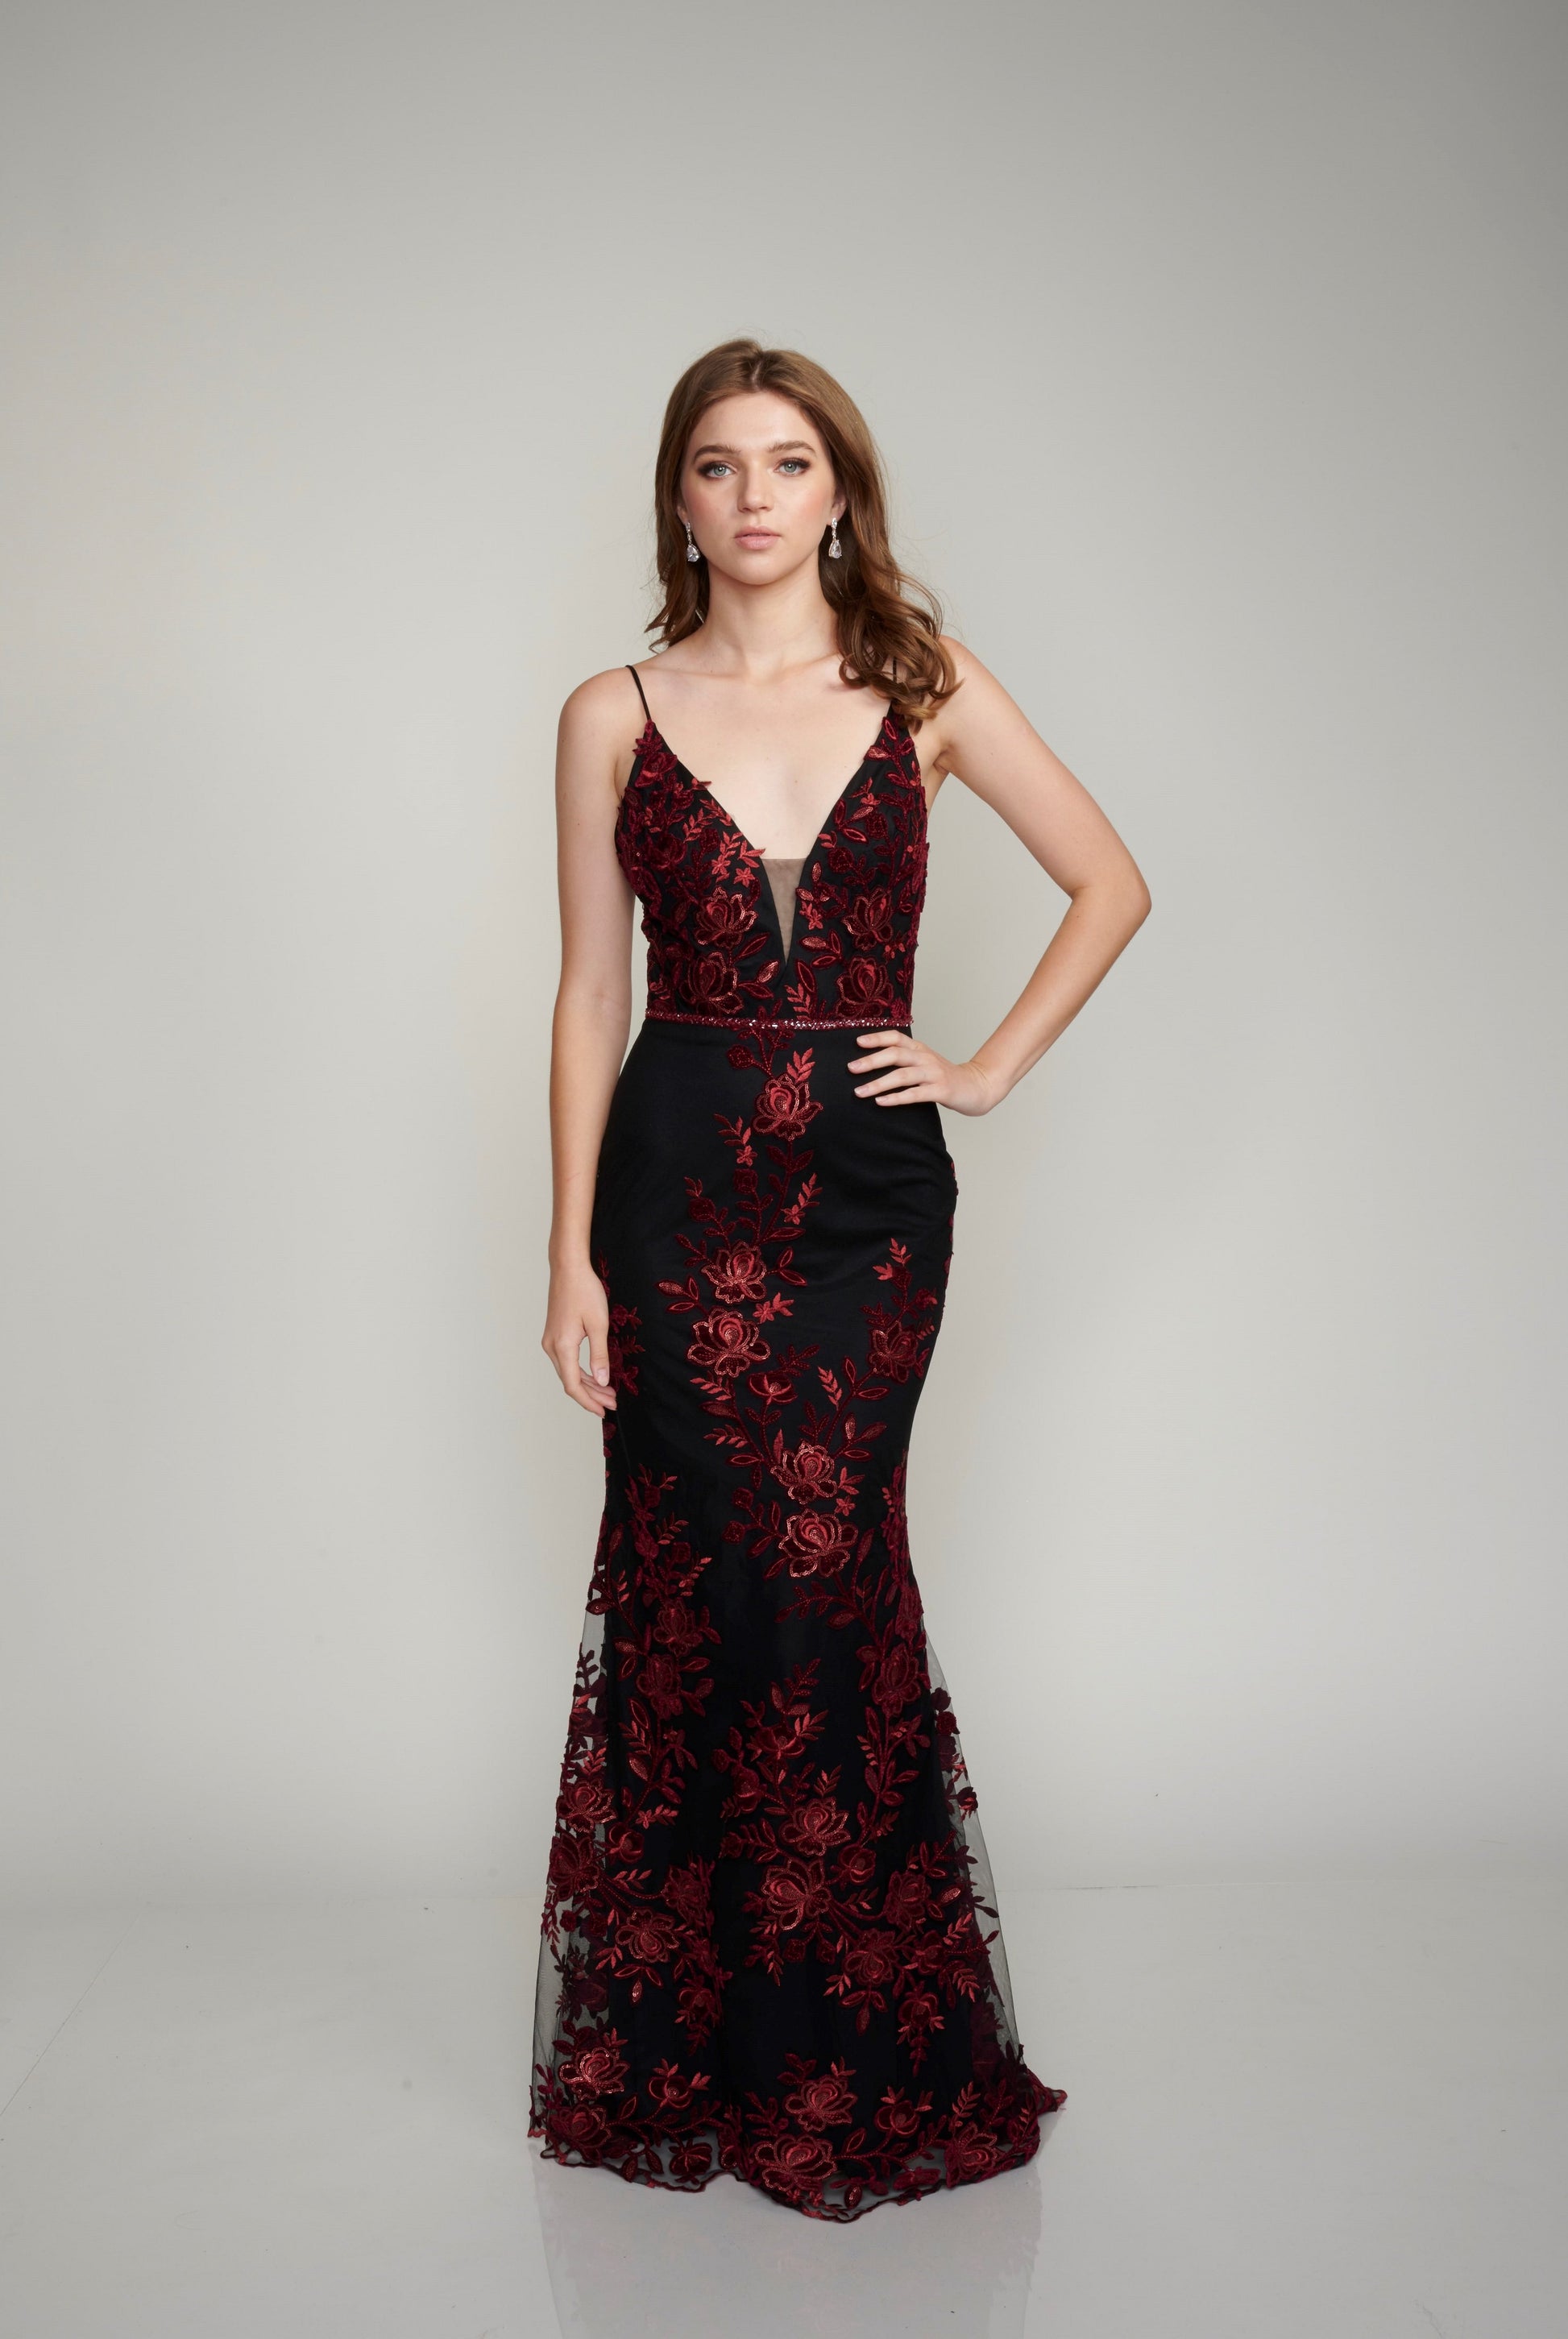 Nina Canacci 2240 Black Royal Prom Dress Floral Lace Dress size 10